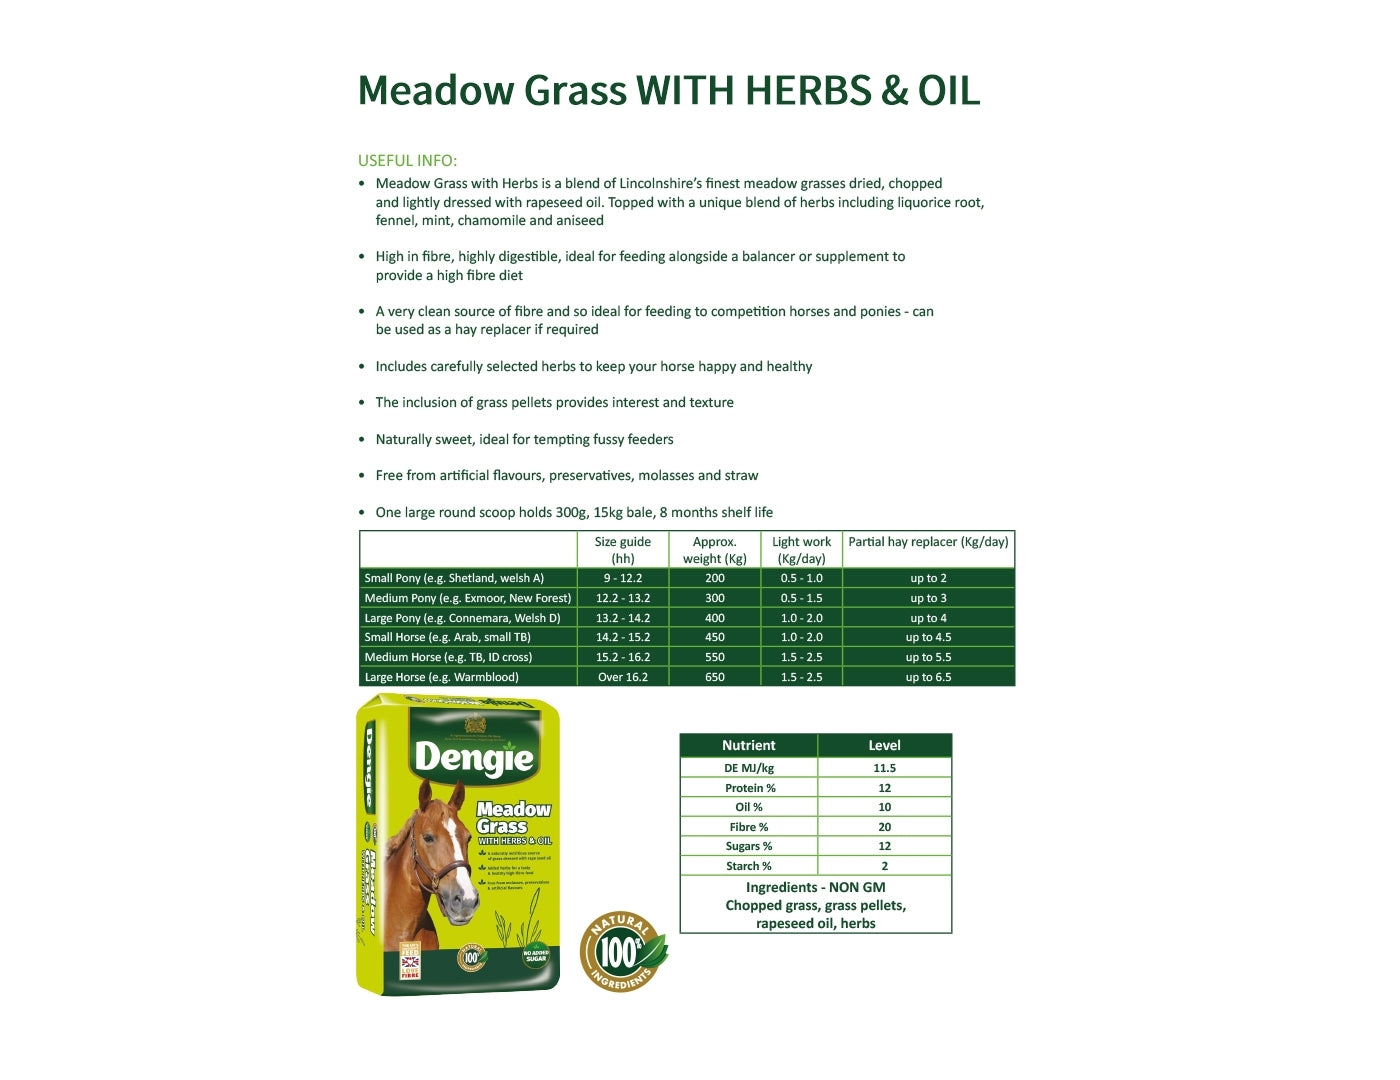 Dengie - Meadow Grass with Herbs & Oil - Buy Online SPR Centre UK